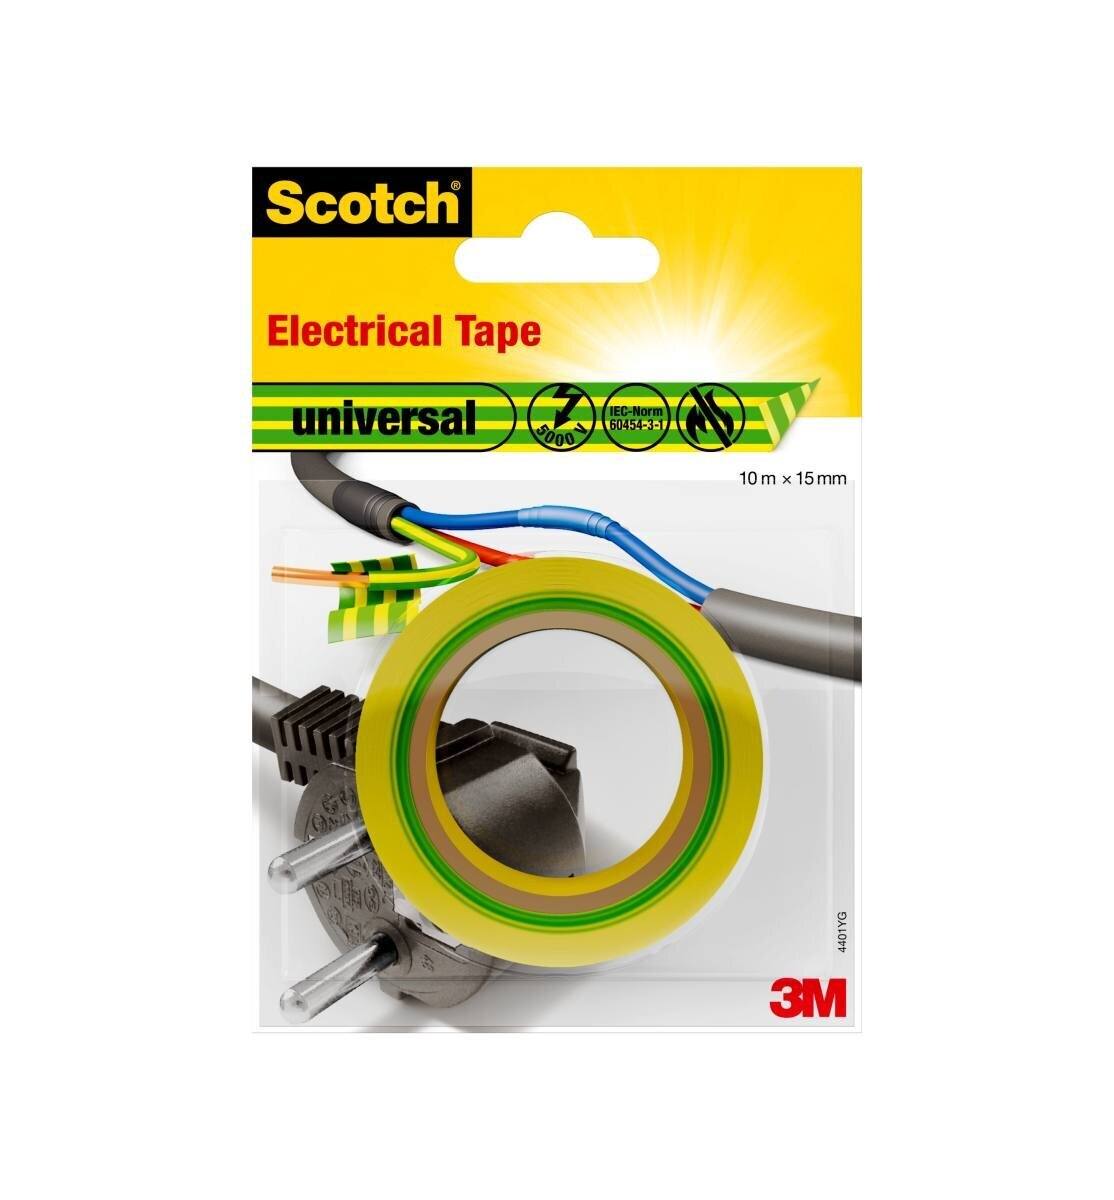 3M Scotch insulating tape universal 4401YG, 15 mm x 10 m, yellow, green